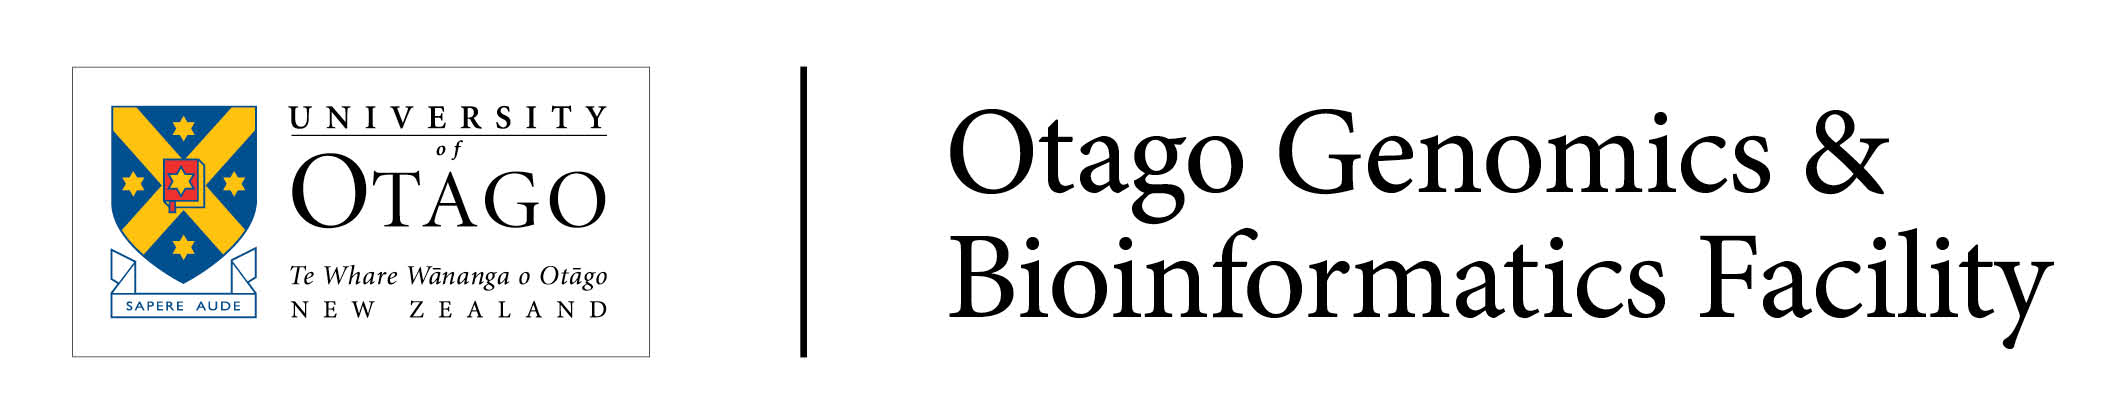 Otago Genomics & Bioinformatics Facility, University of Otago